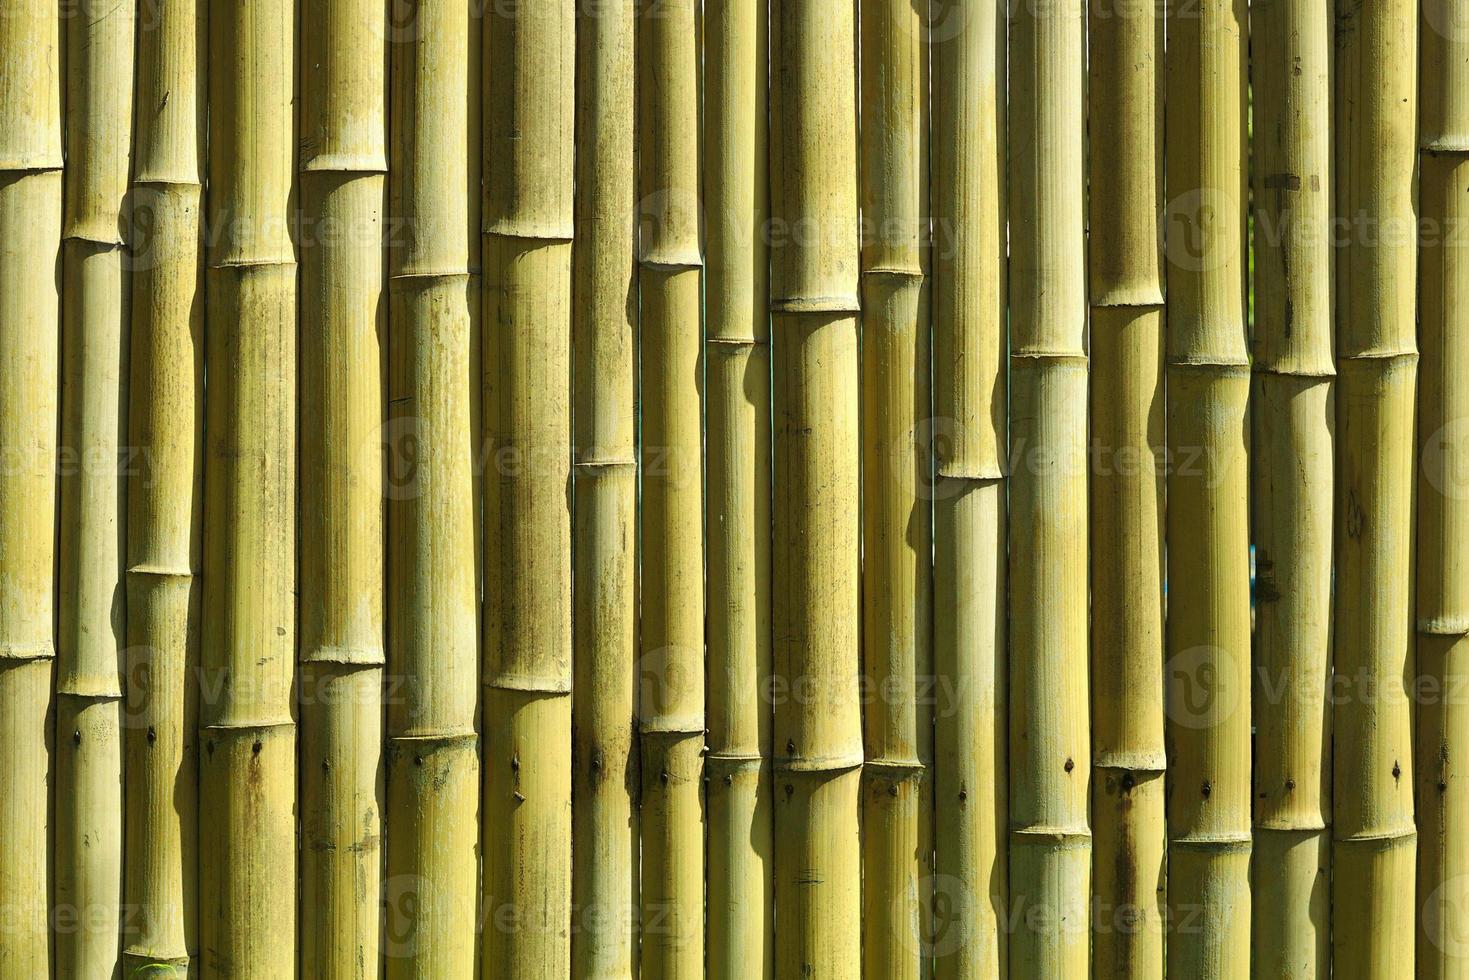 fond de bambou photo